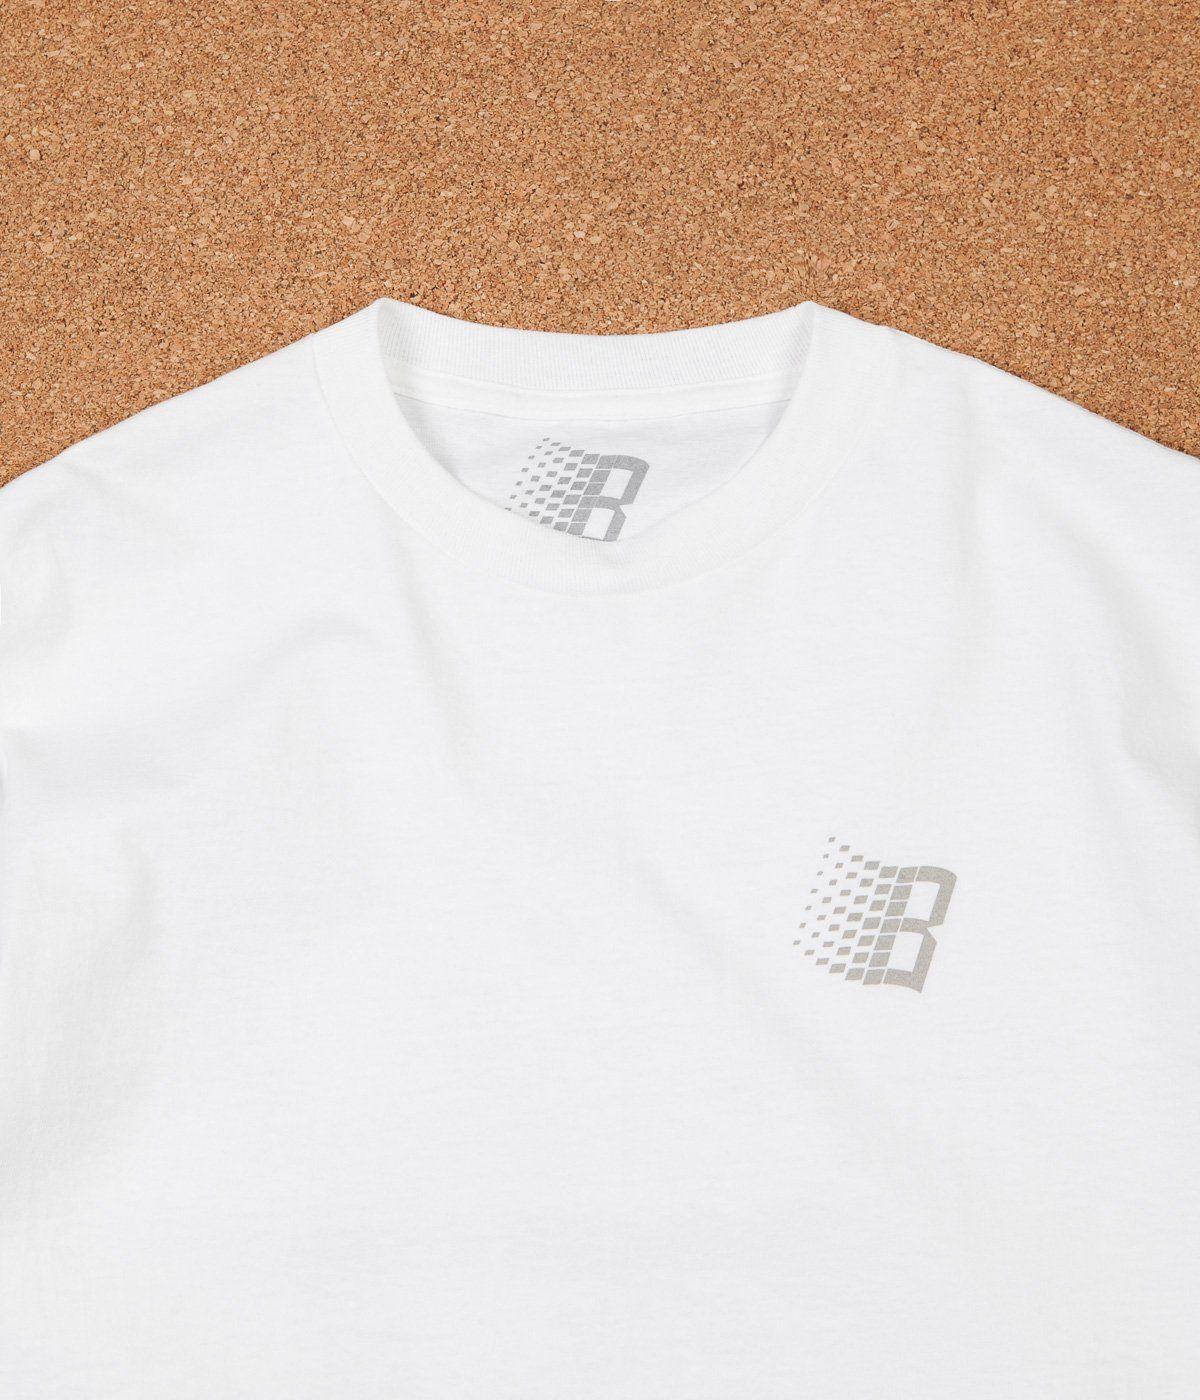 Burgandy and Grey Logo - Bronze 56K B Logo T-Shirt - White / Grey / Burgundy | Flatspot